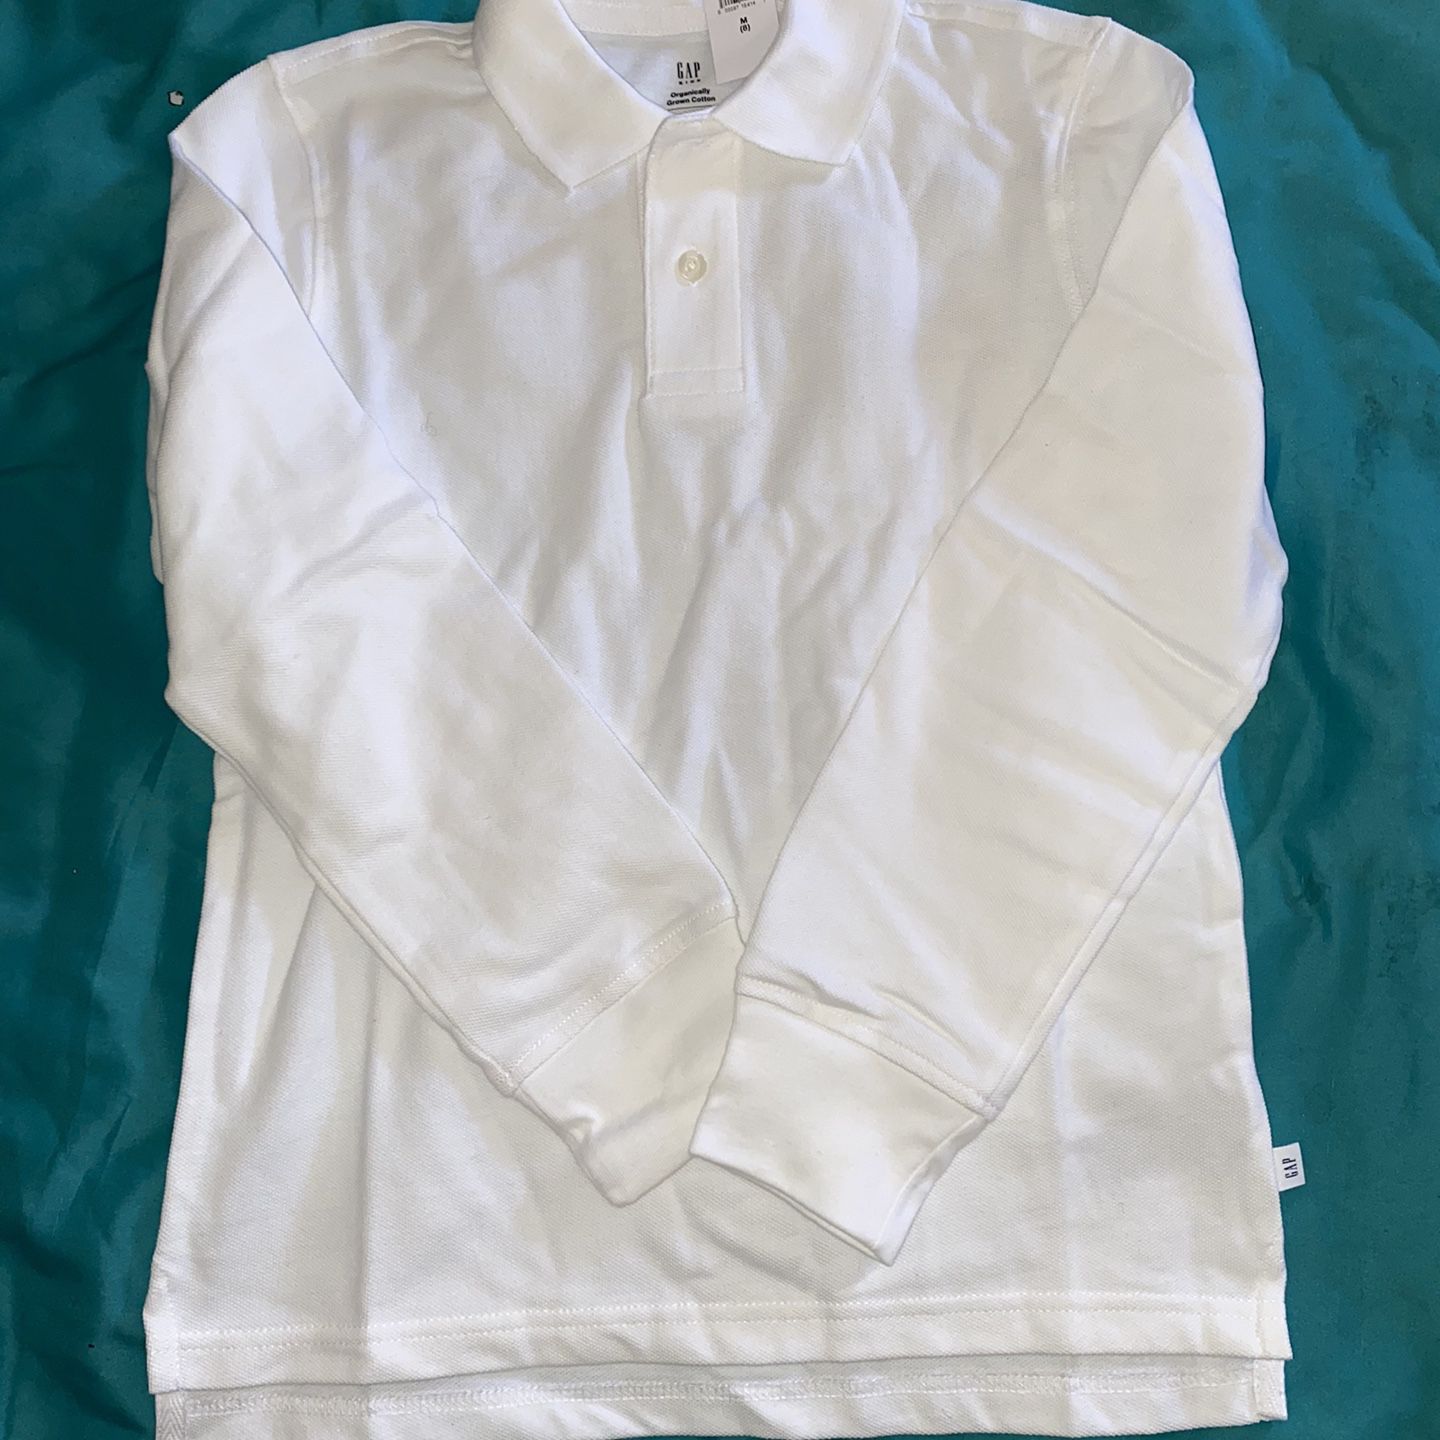 White Long Sleeve Gap Uniform Shirts